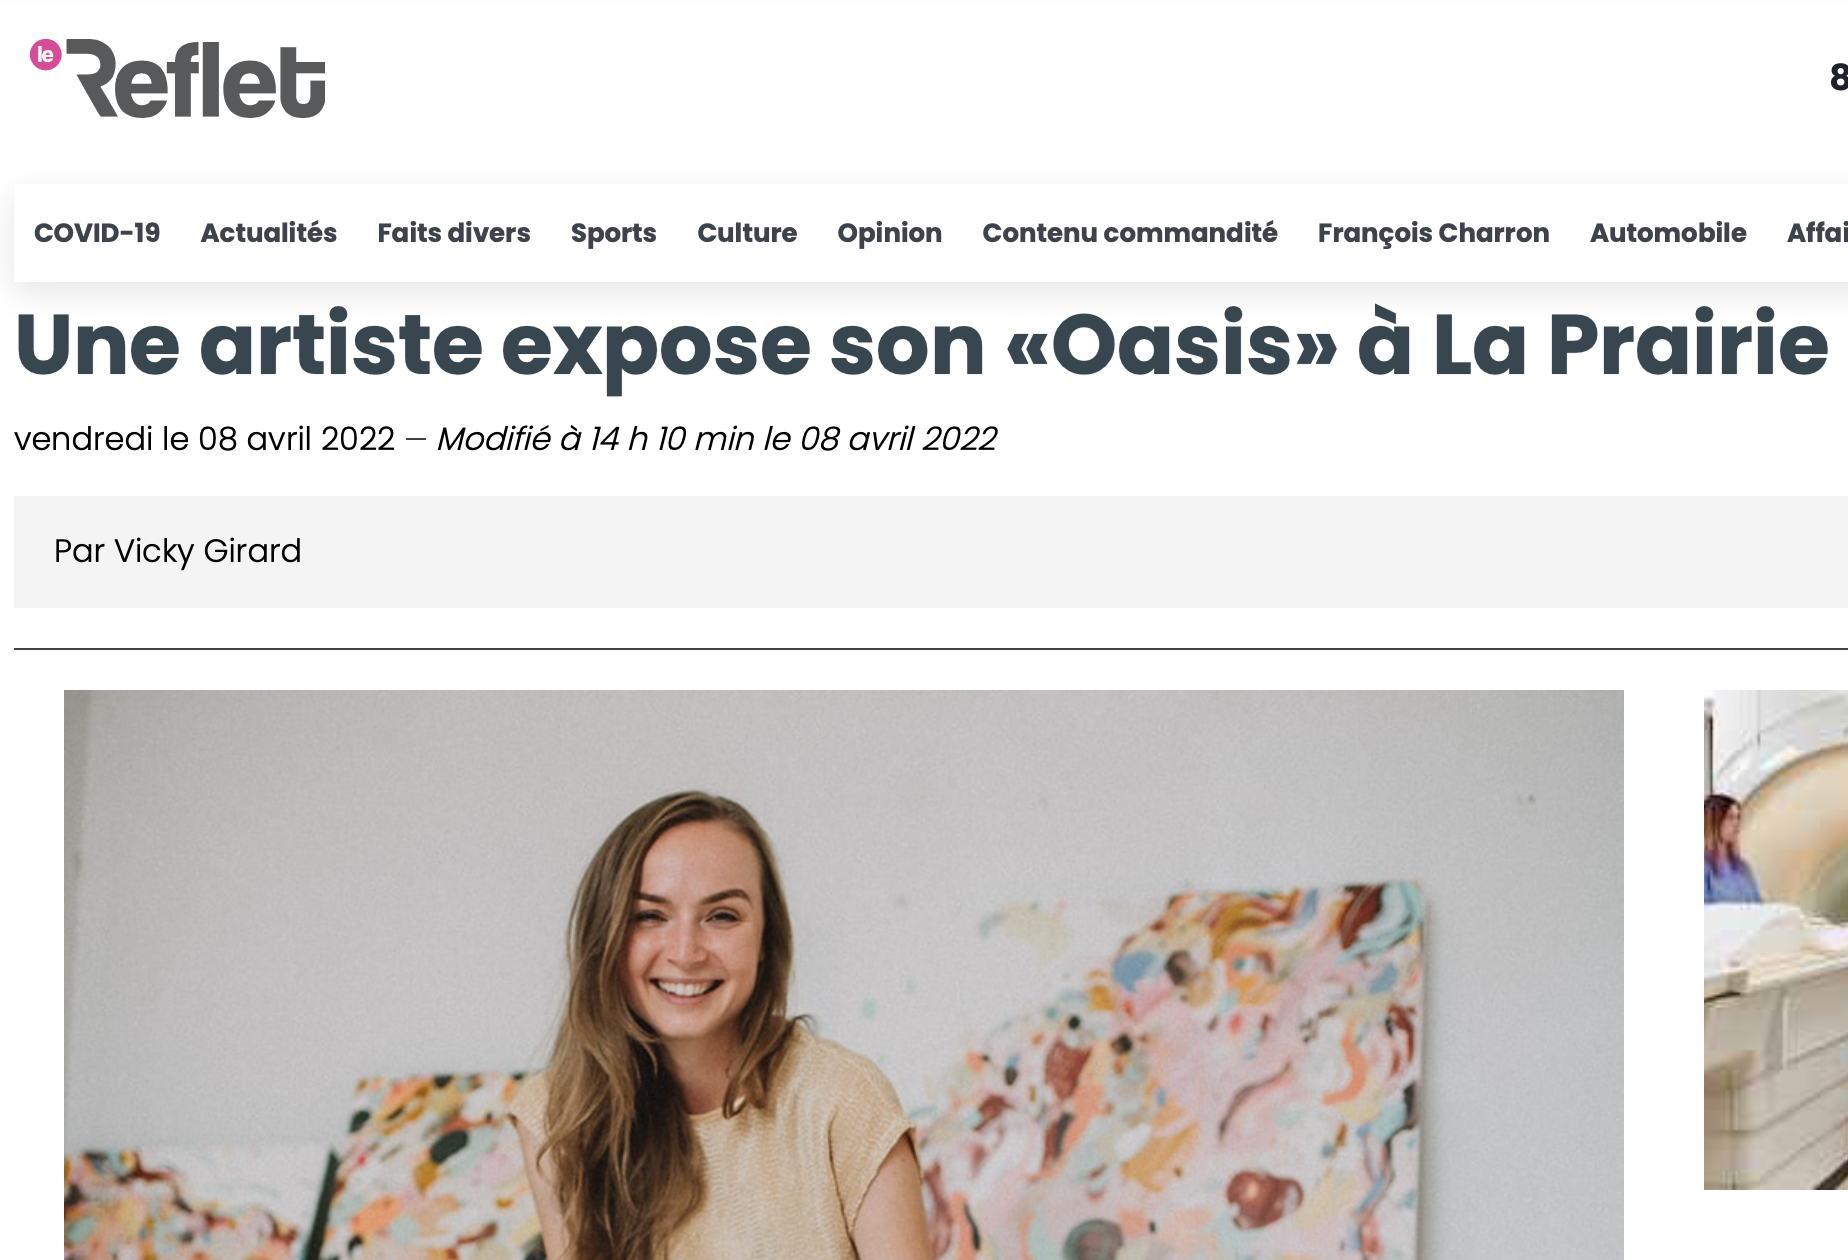  Une artiste expose son «Oasis» à La Prairie. Vicky Girard.  Le Reflet , 8 avril 2022. Lire l’article complet    ici.  